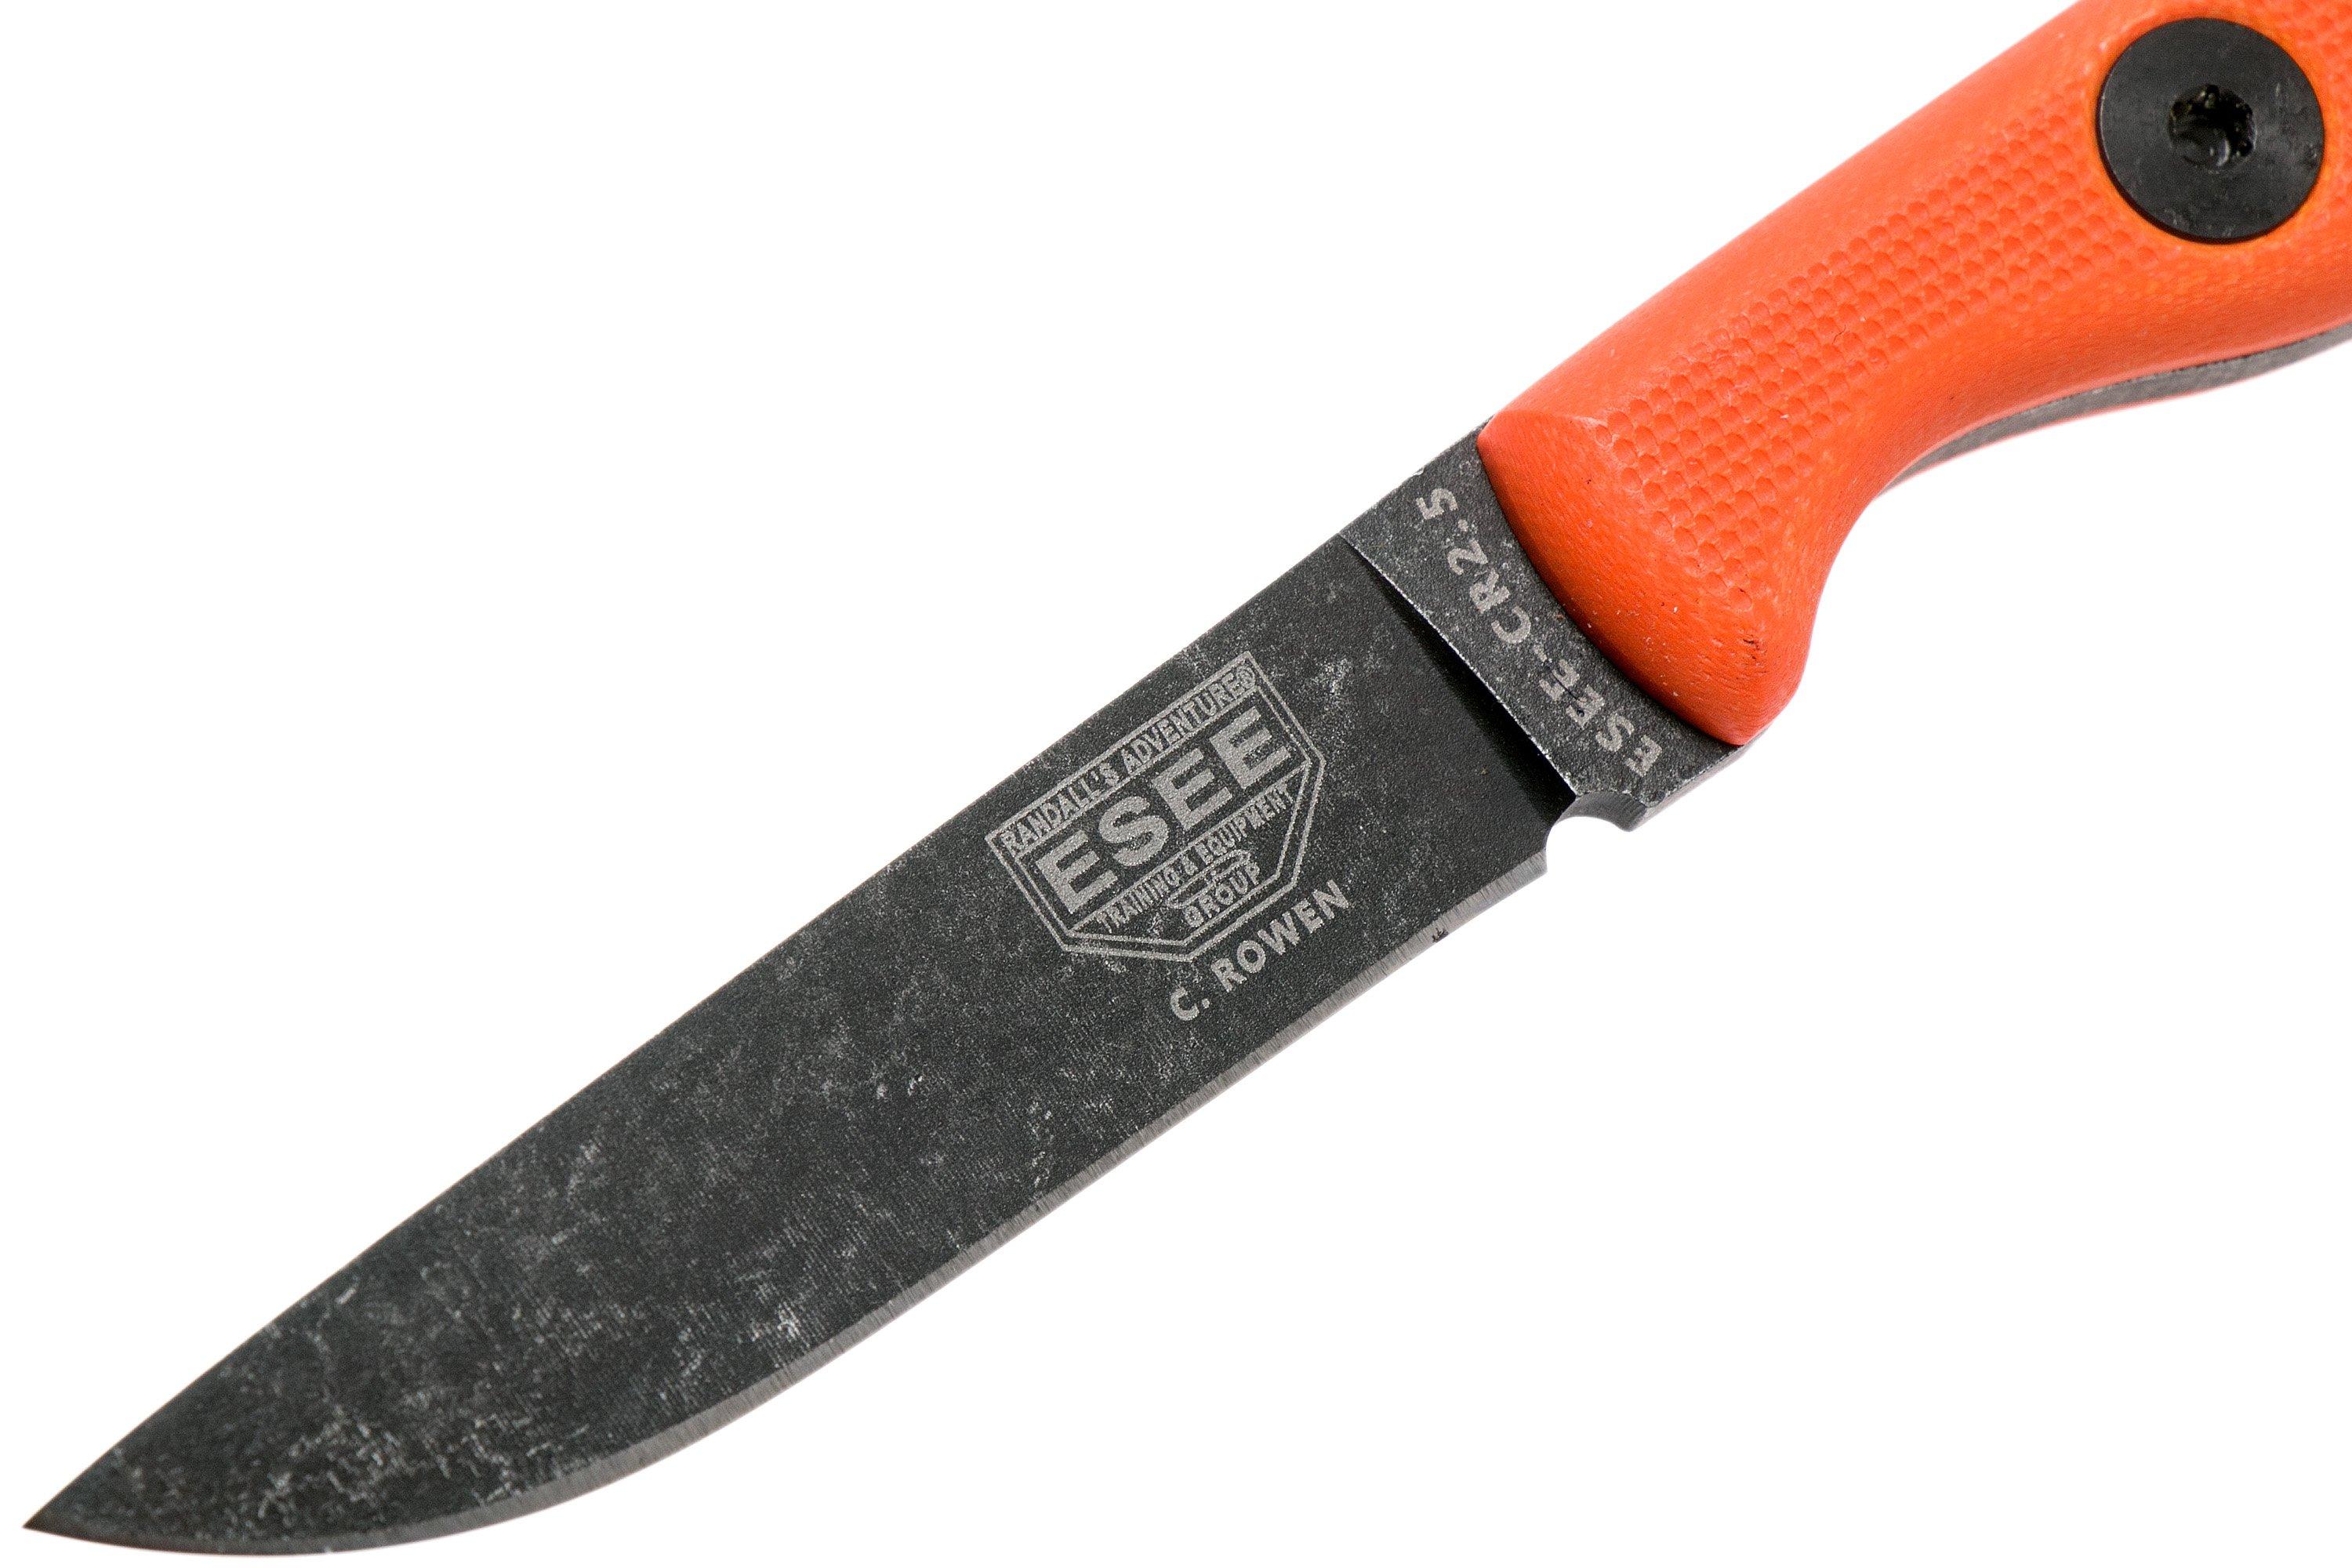 ESEE Camp-Lore CR 2.5 Black Oxide Coating fixed knife, Cody Rowen